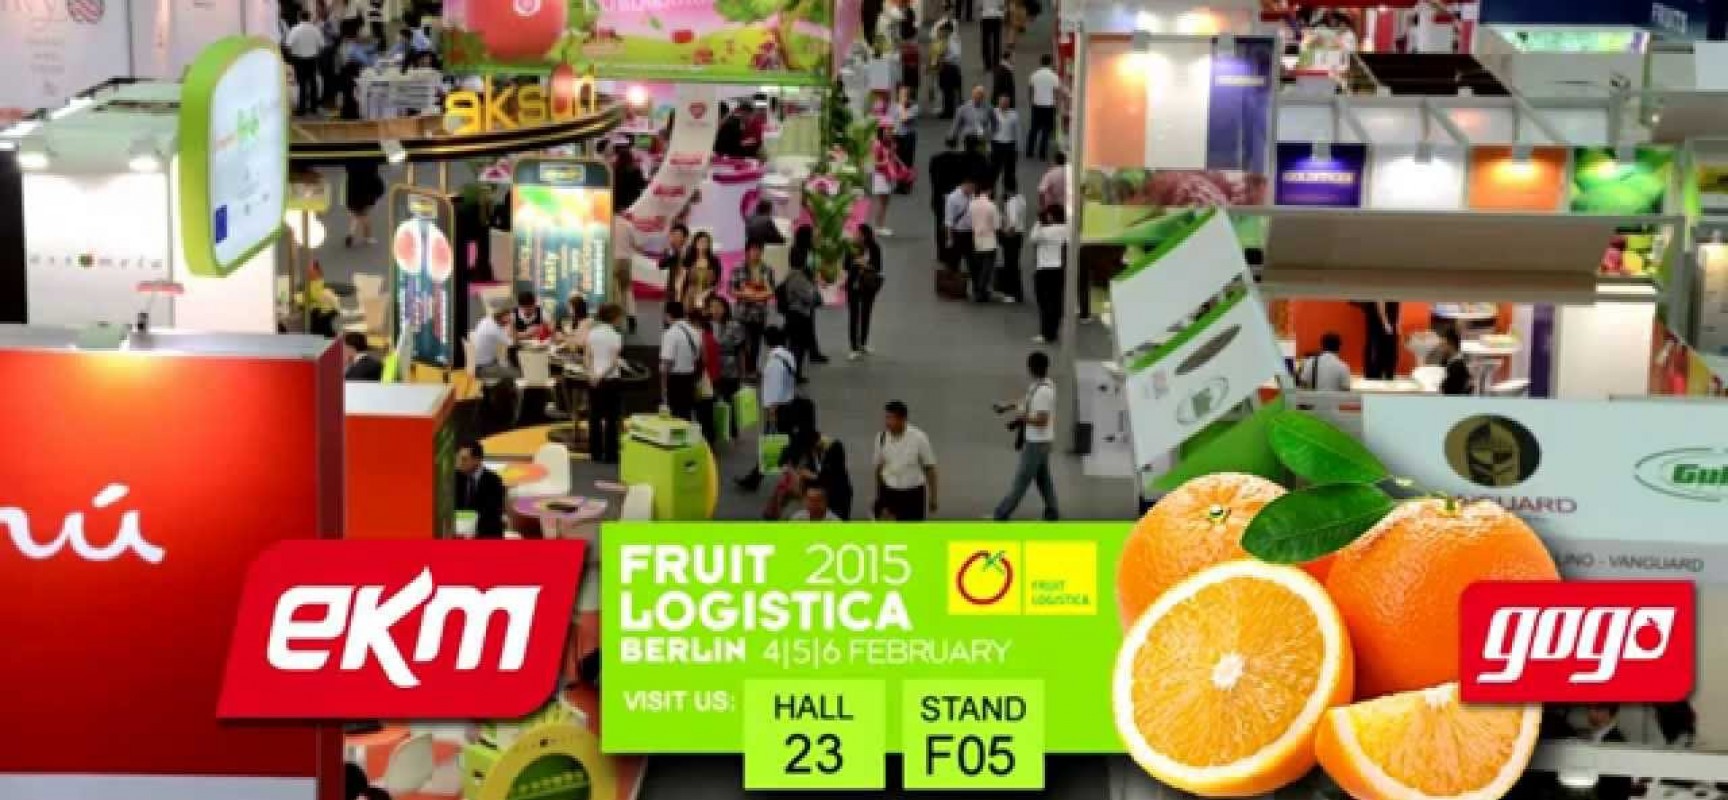 Fruit Logistica 2015, GAL Ponte Lama a capo di un progetto di cooperazione transazionale